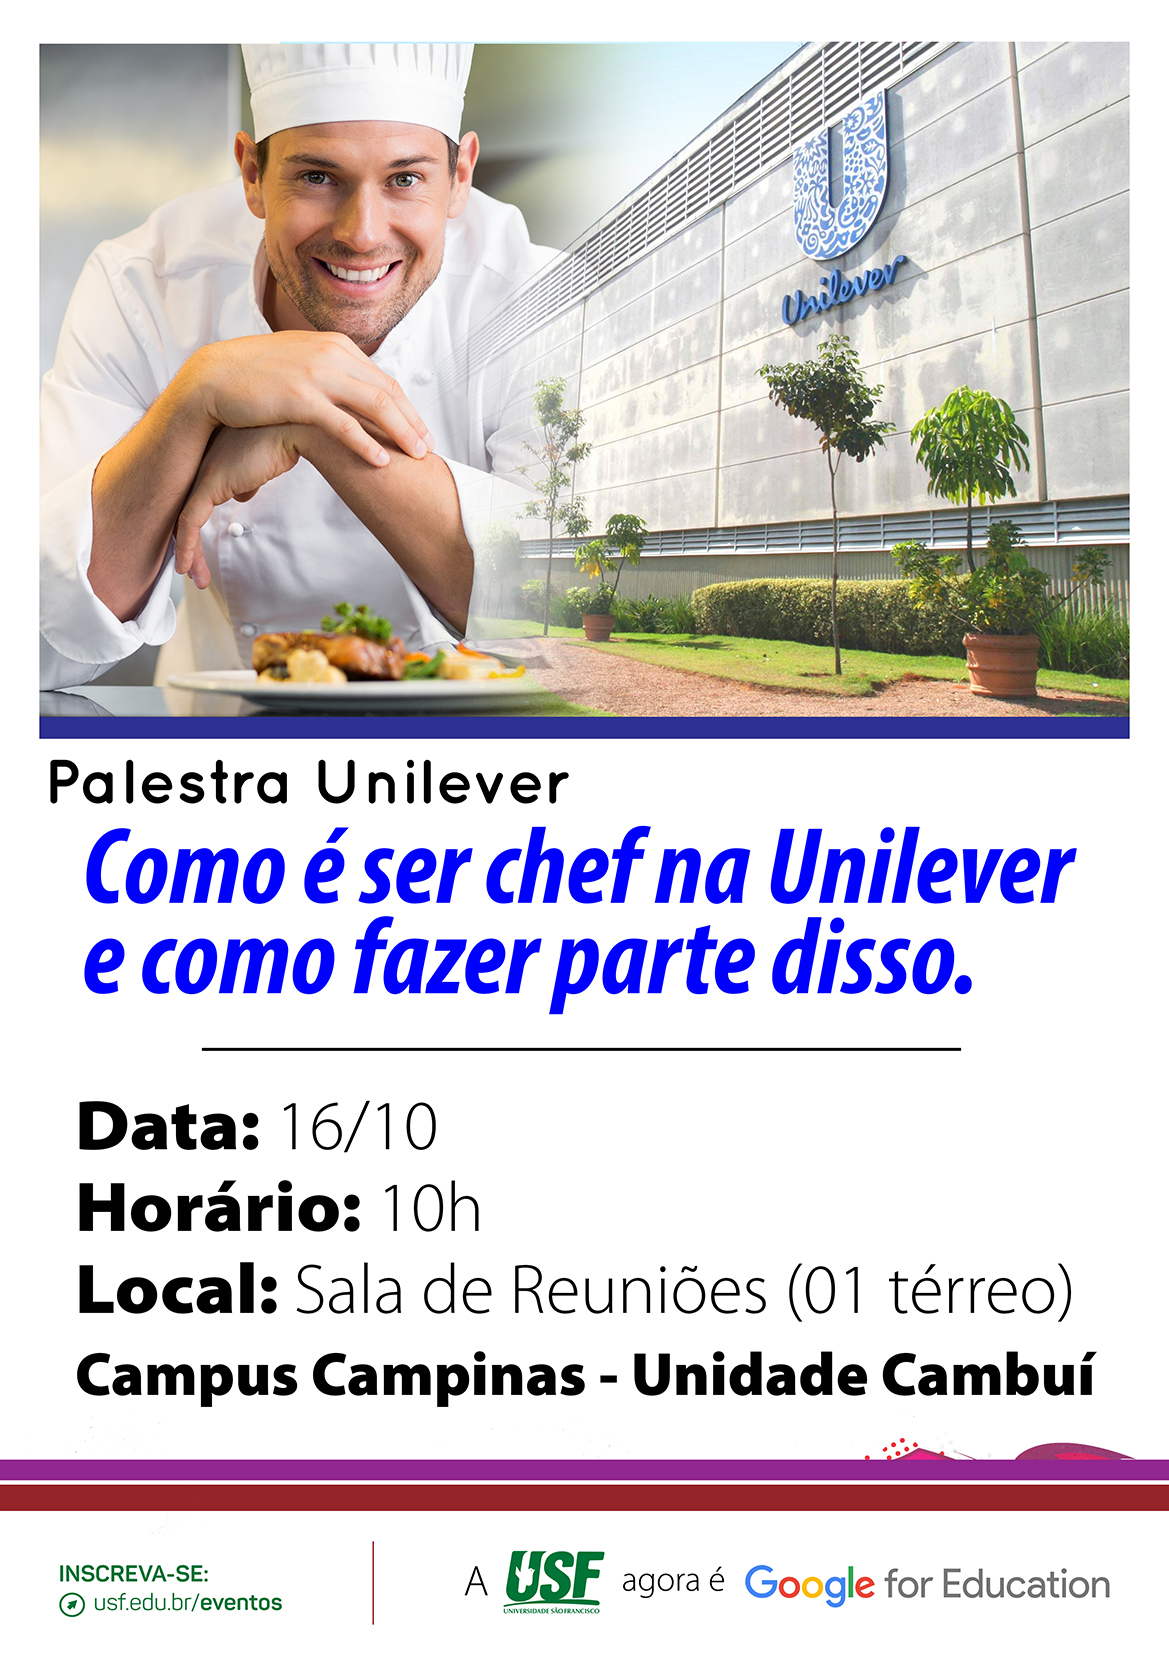 Palestra Unilever 